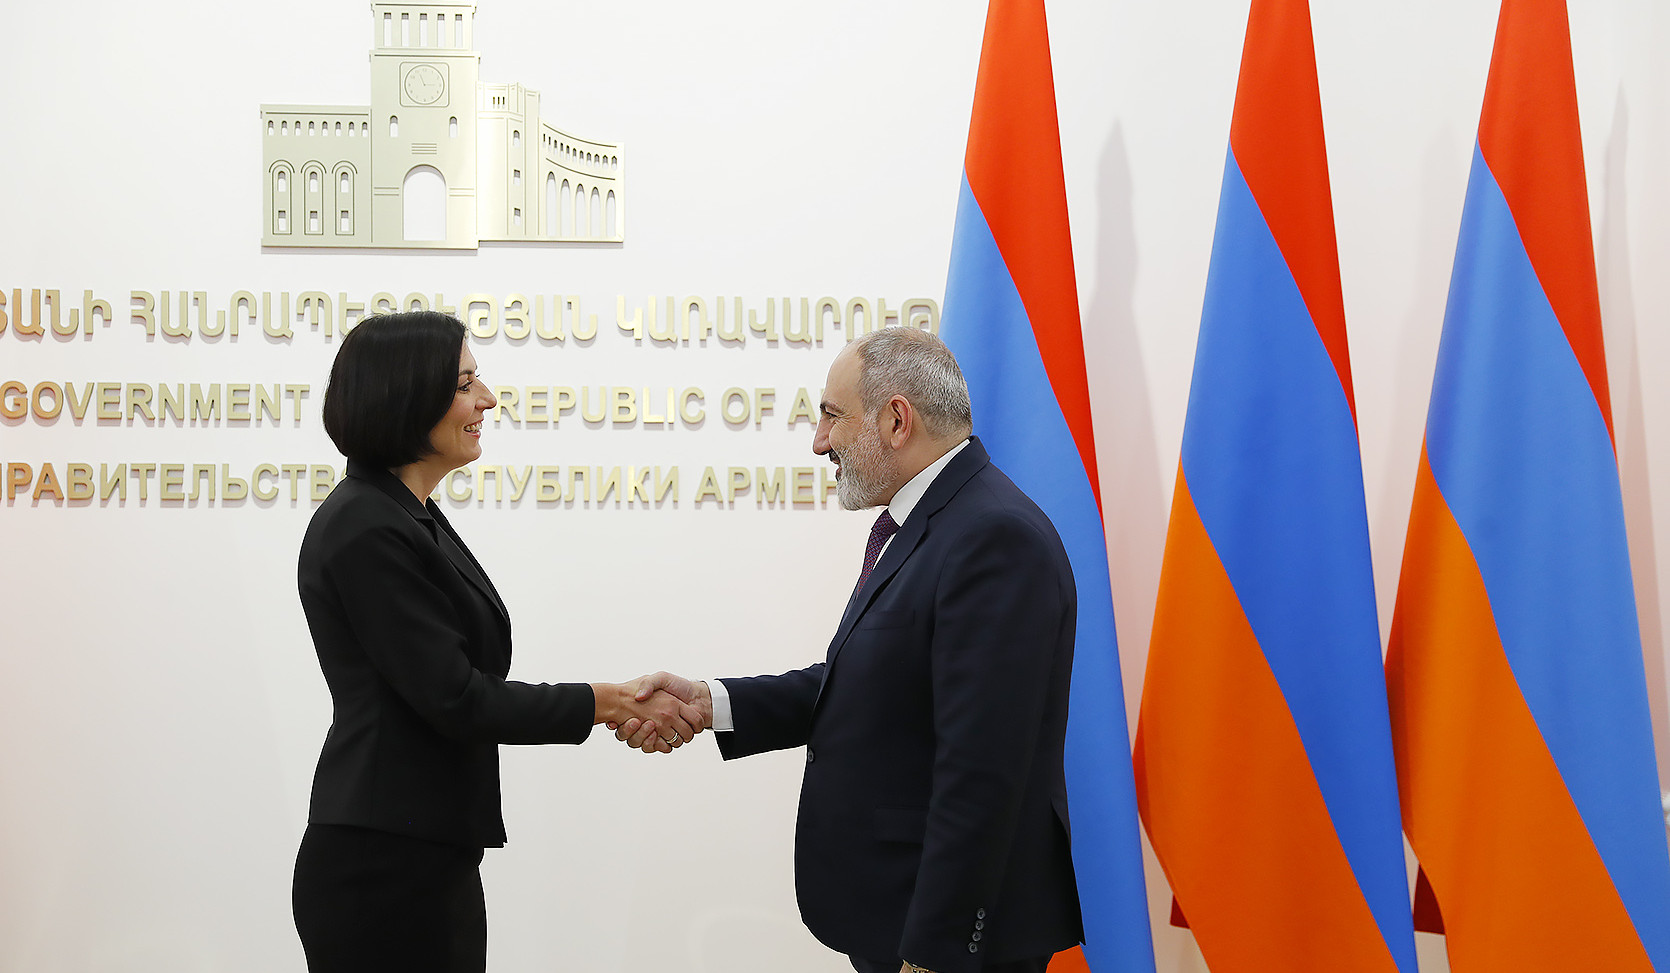 Czech Republic attaches great importance to multi-sector cooperation with Armenia: Marketa Pekarova to Pashinyan